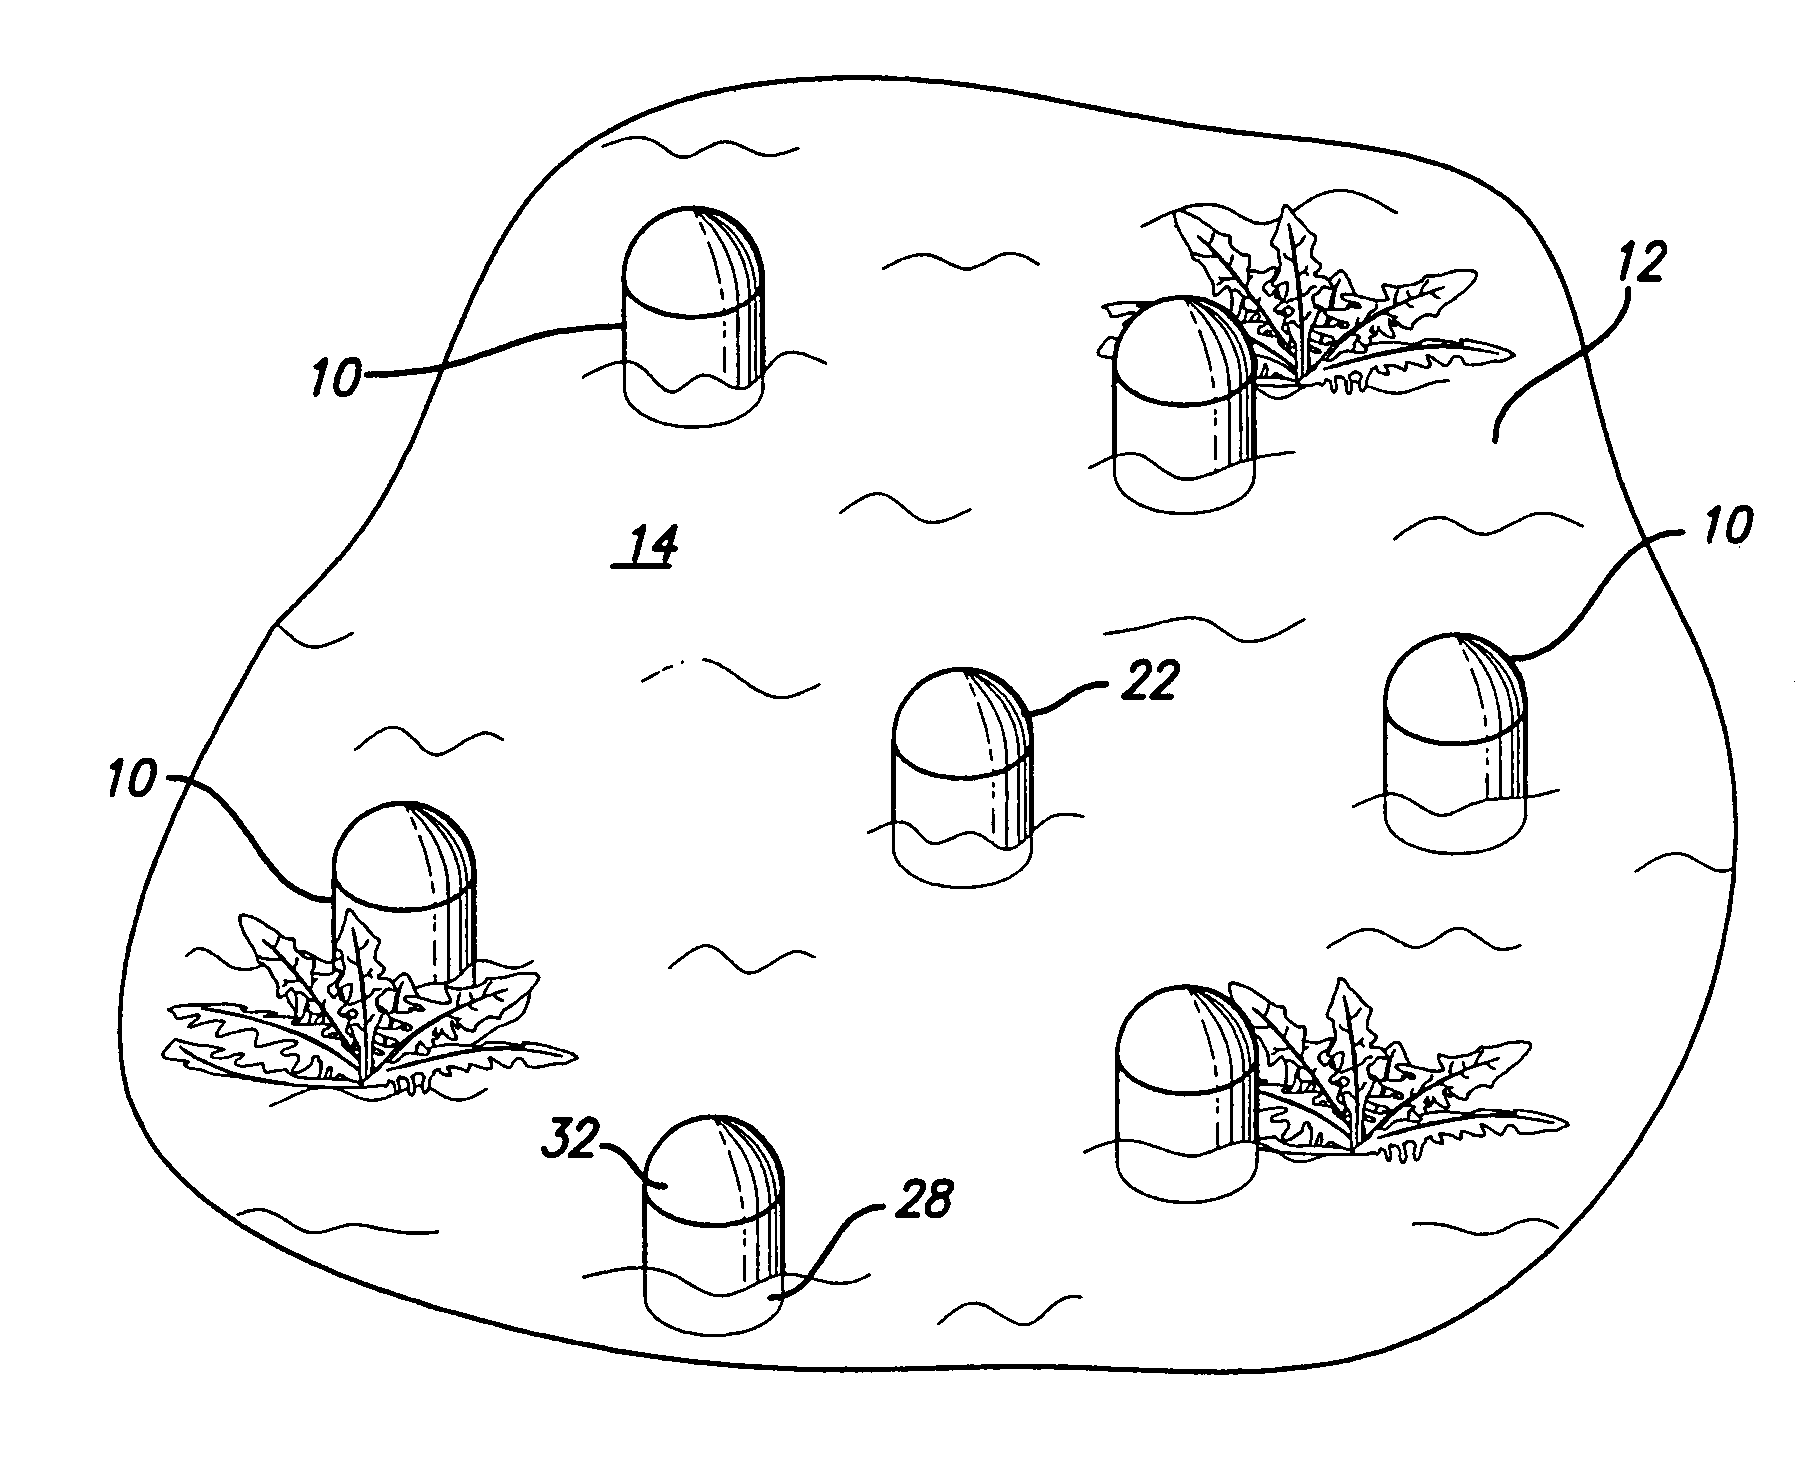 Multi-unit, distributive, regenerable, in situ desalination method